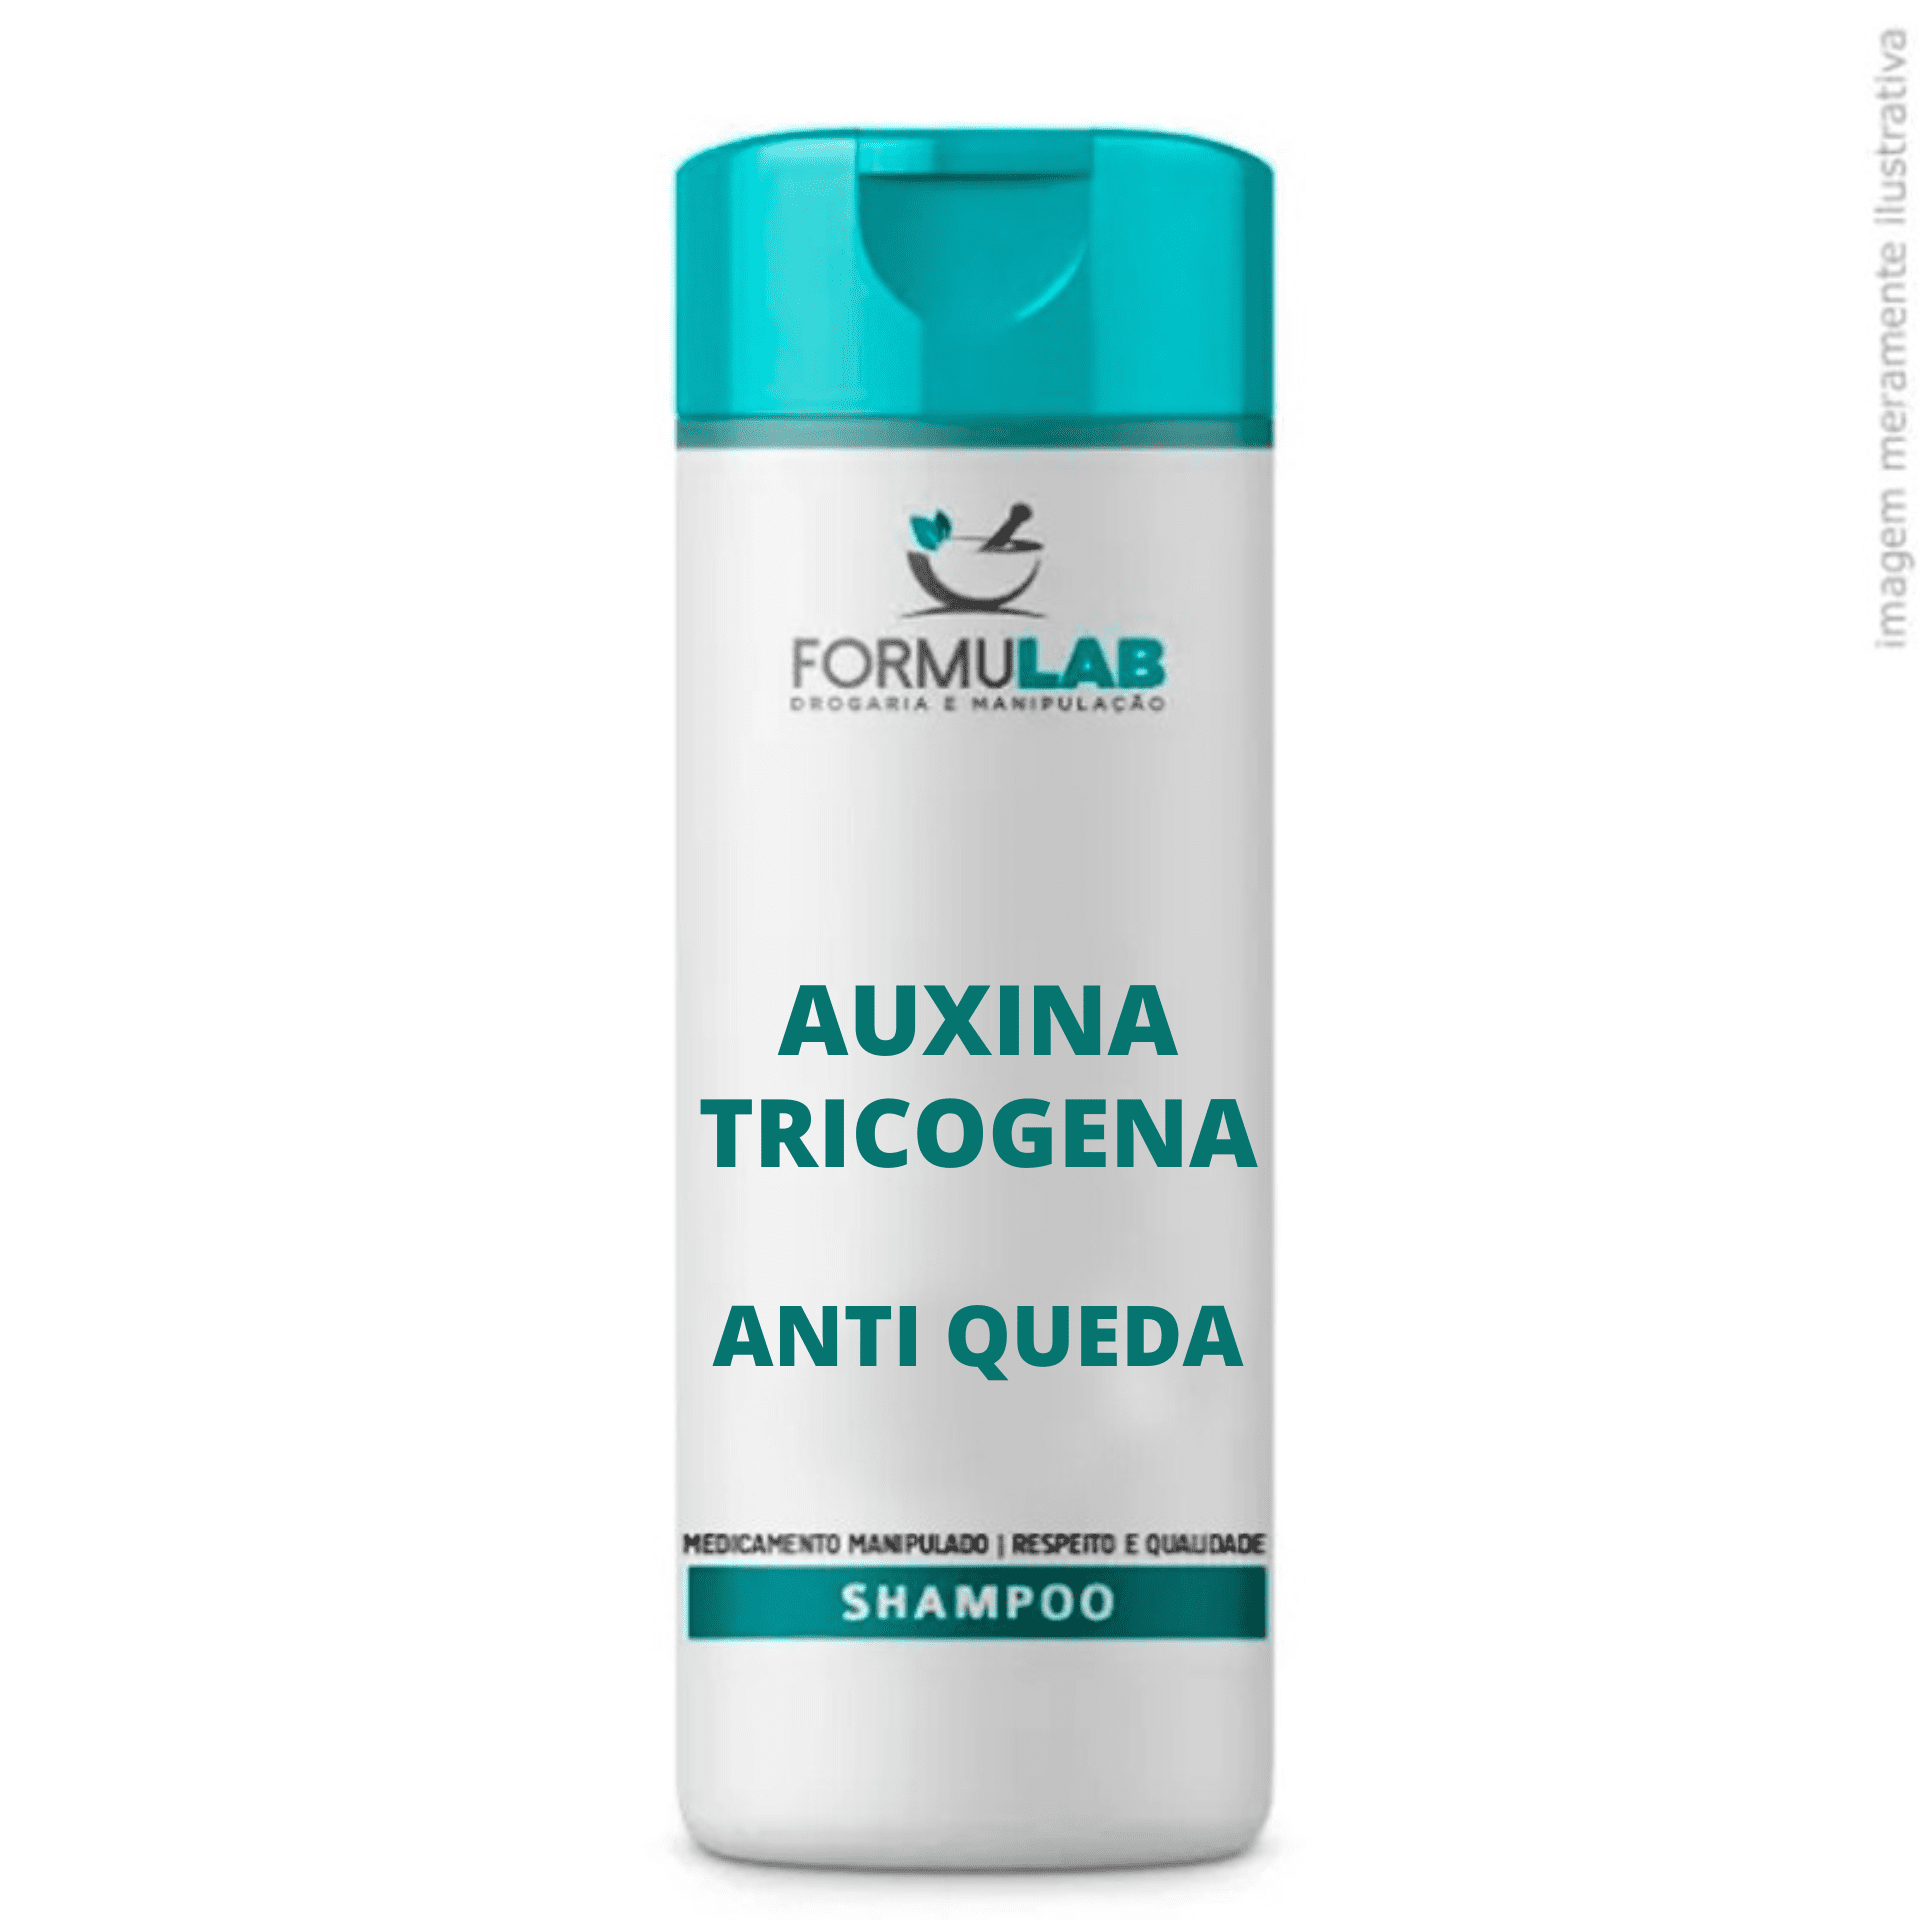 Auxina Tricogena 10% - Shampoo Anti queda 120ml